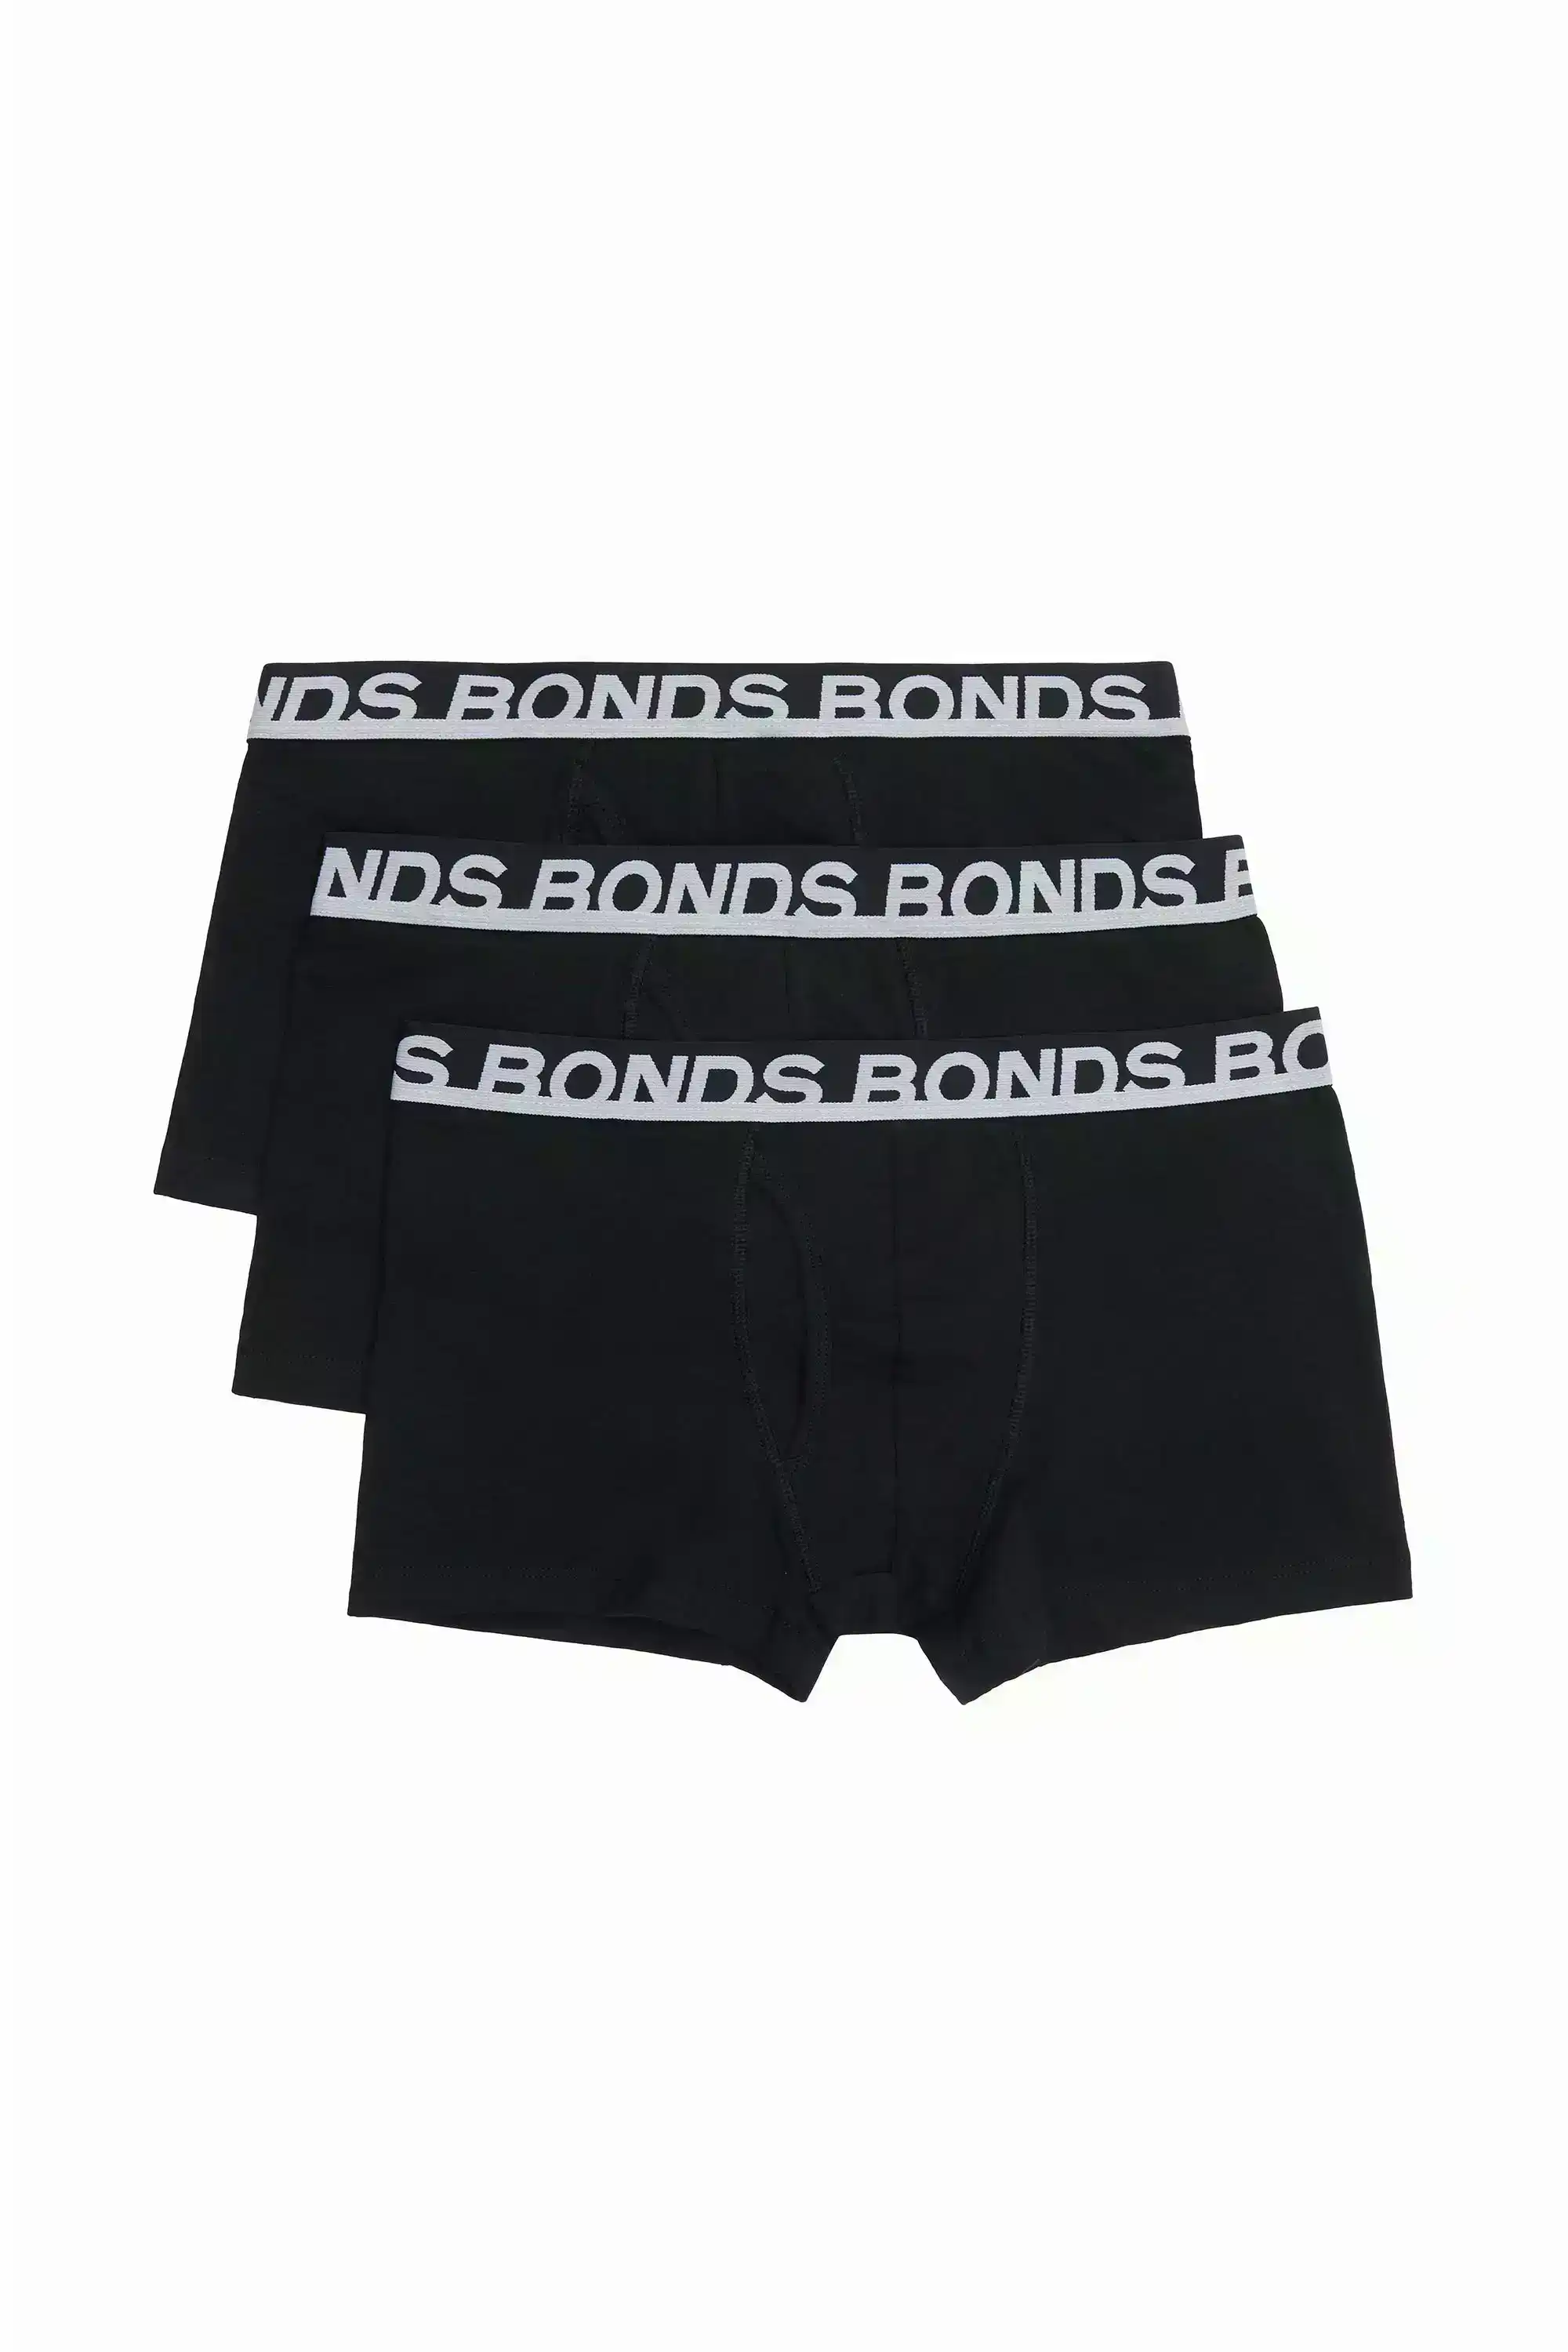 9 x Bonds Mens Everyday Trunks Underwear Black